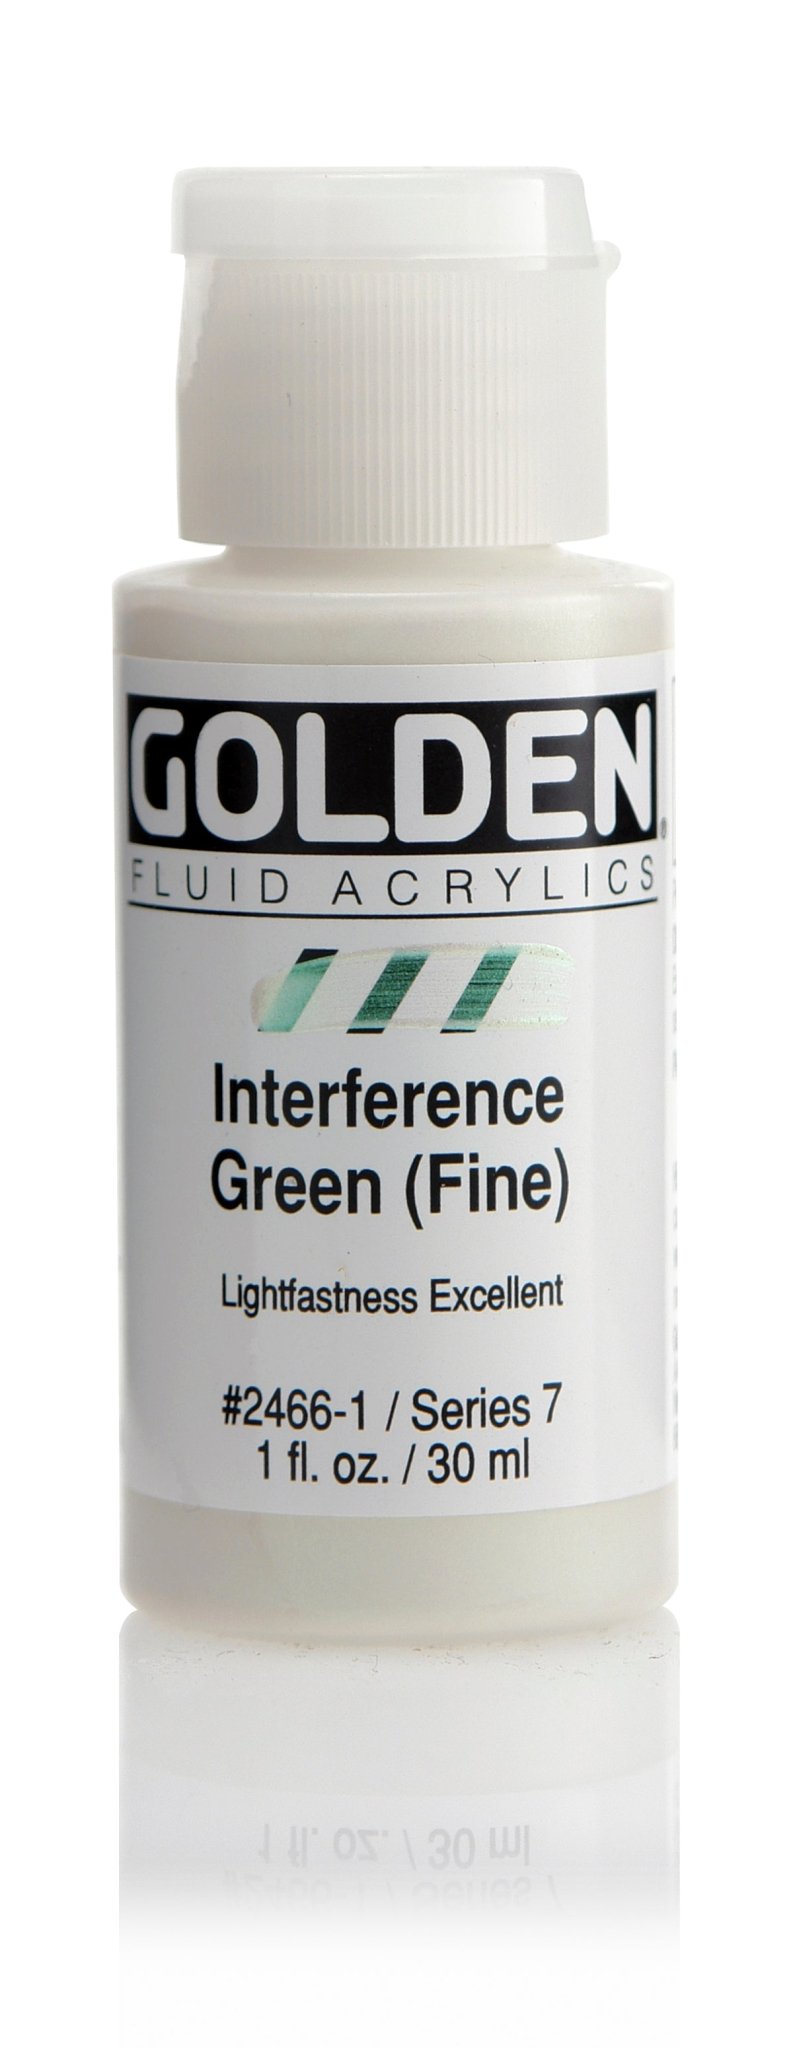 Golden Fluid Acrylics - Interference Green (Fine) - 30ml - Create A Little Magic (Pty) Ltd